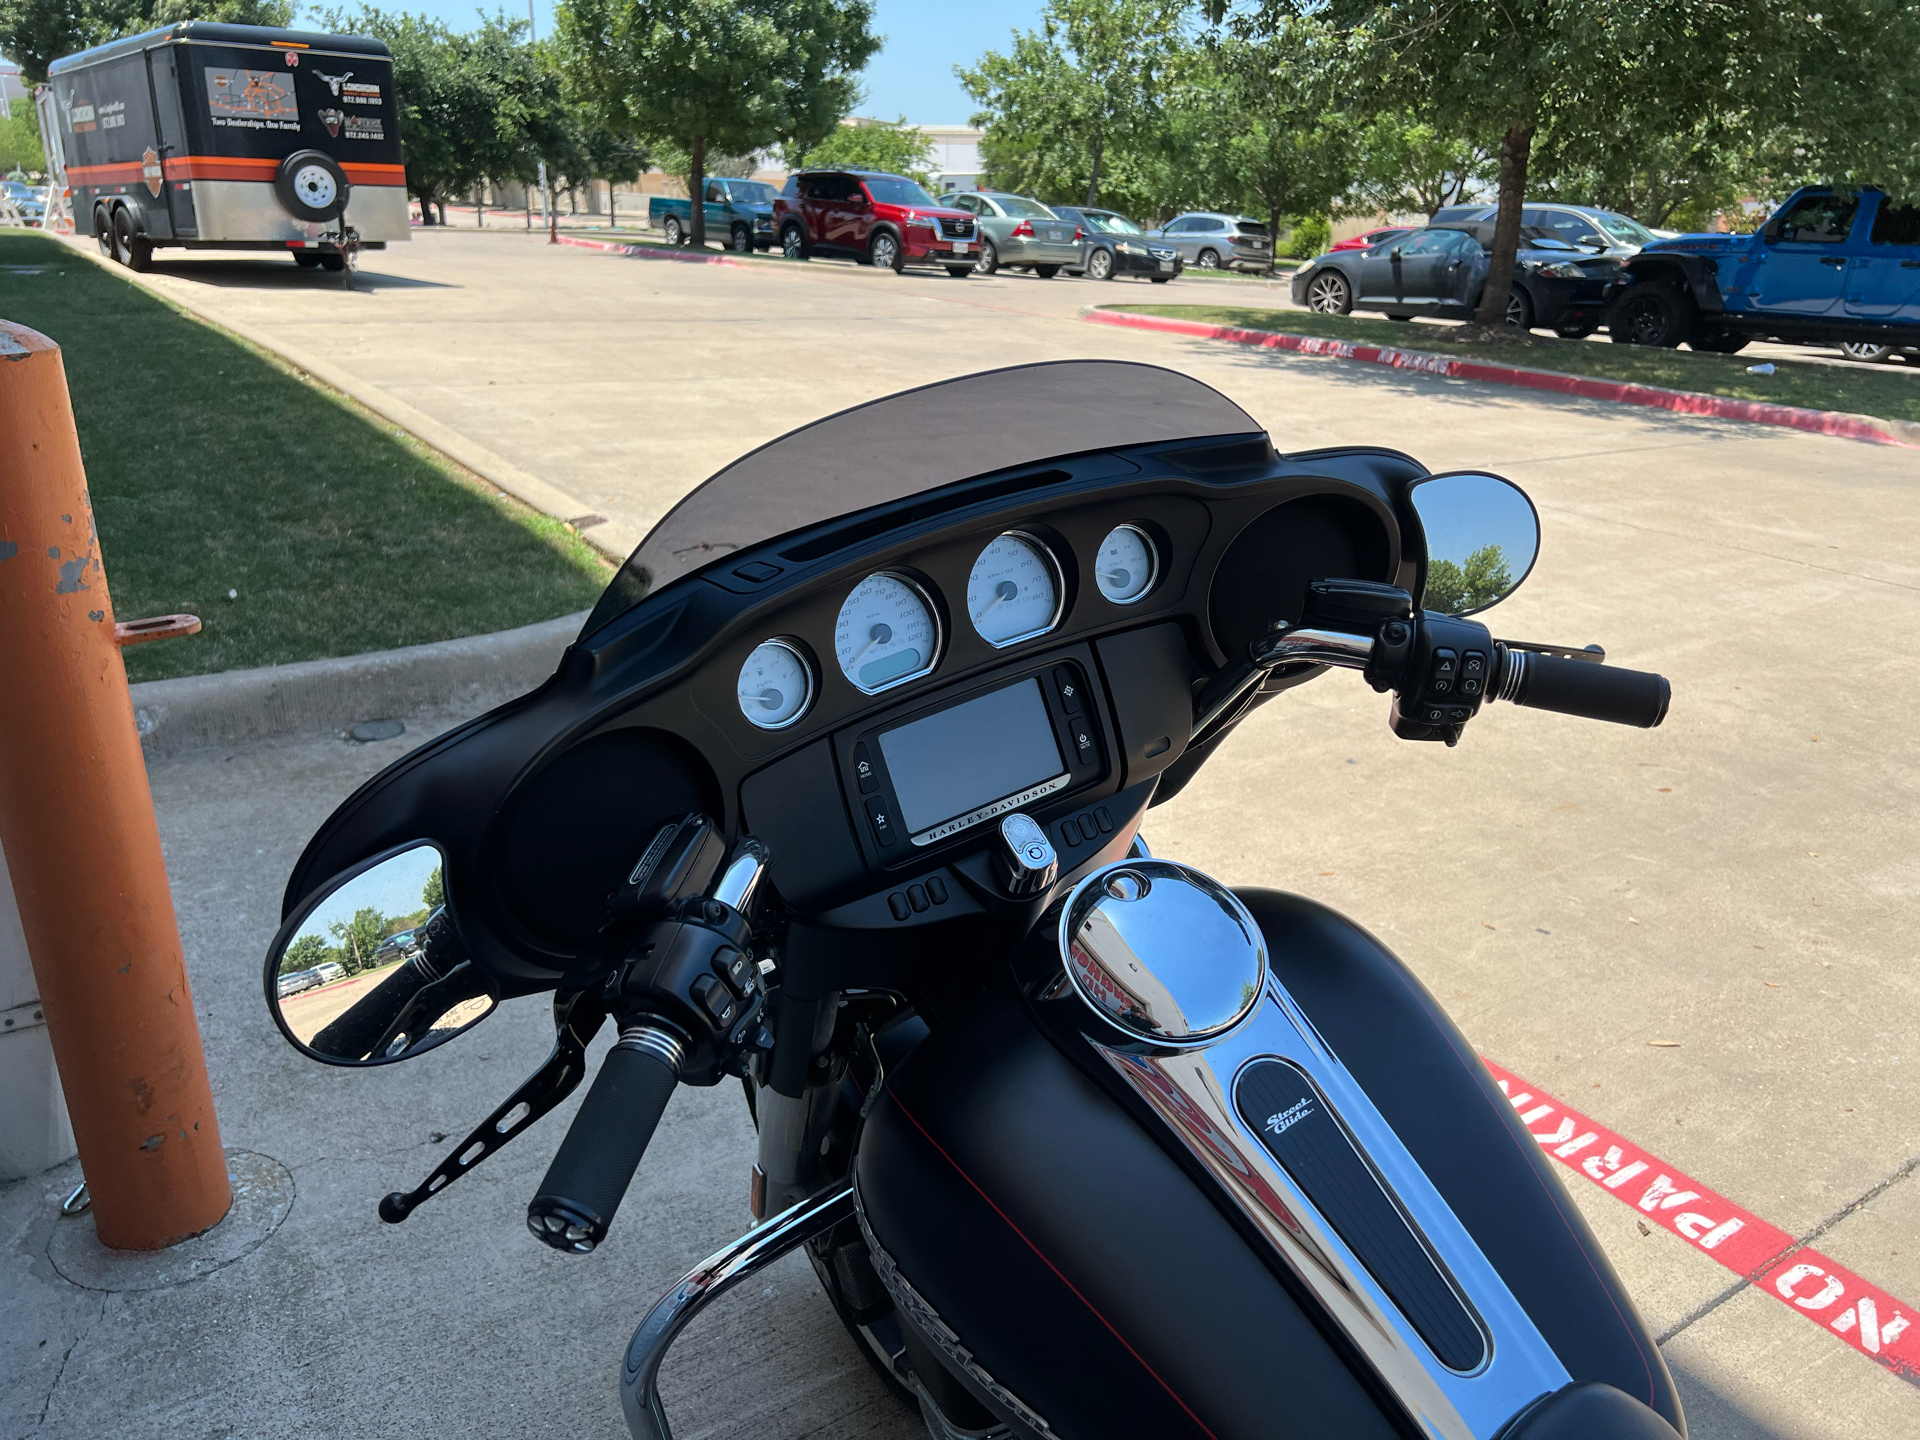 2016 Harley-Davidson Street Glide® Special in Grand Prairie, Texas - Photo 7